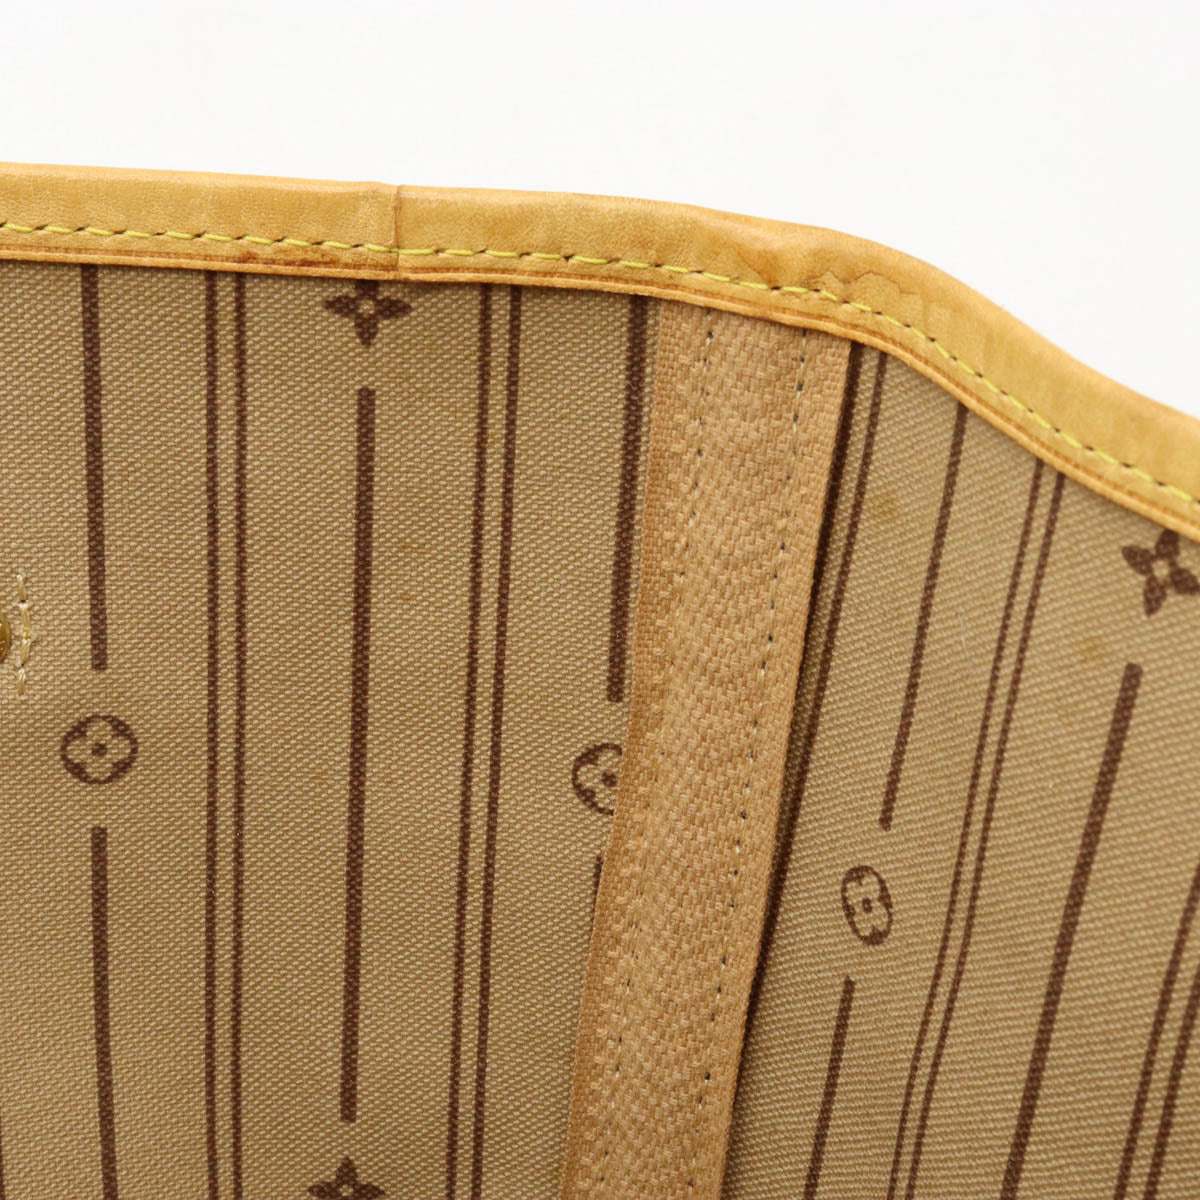 Vintage Louis Vuitton Monogram Neverfull MM Tote Handbag